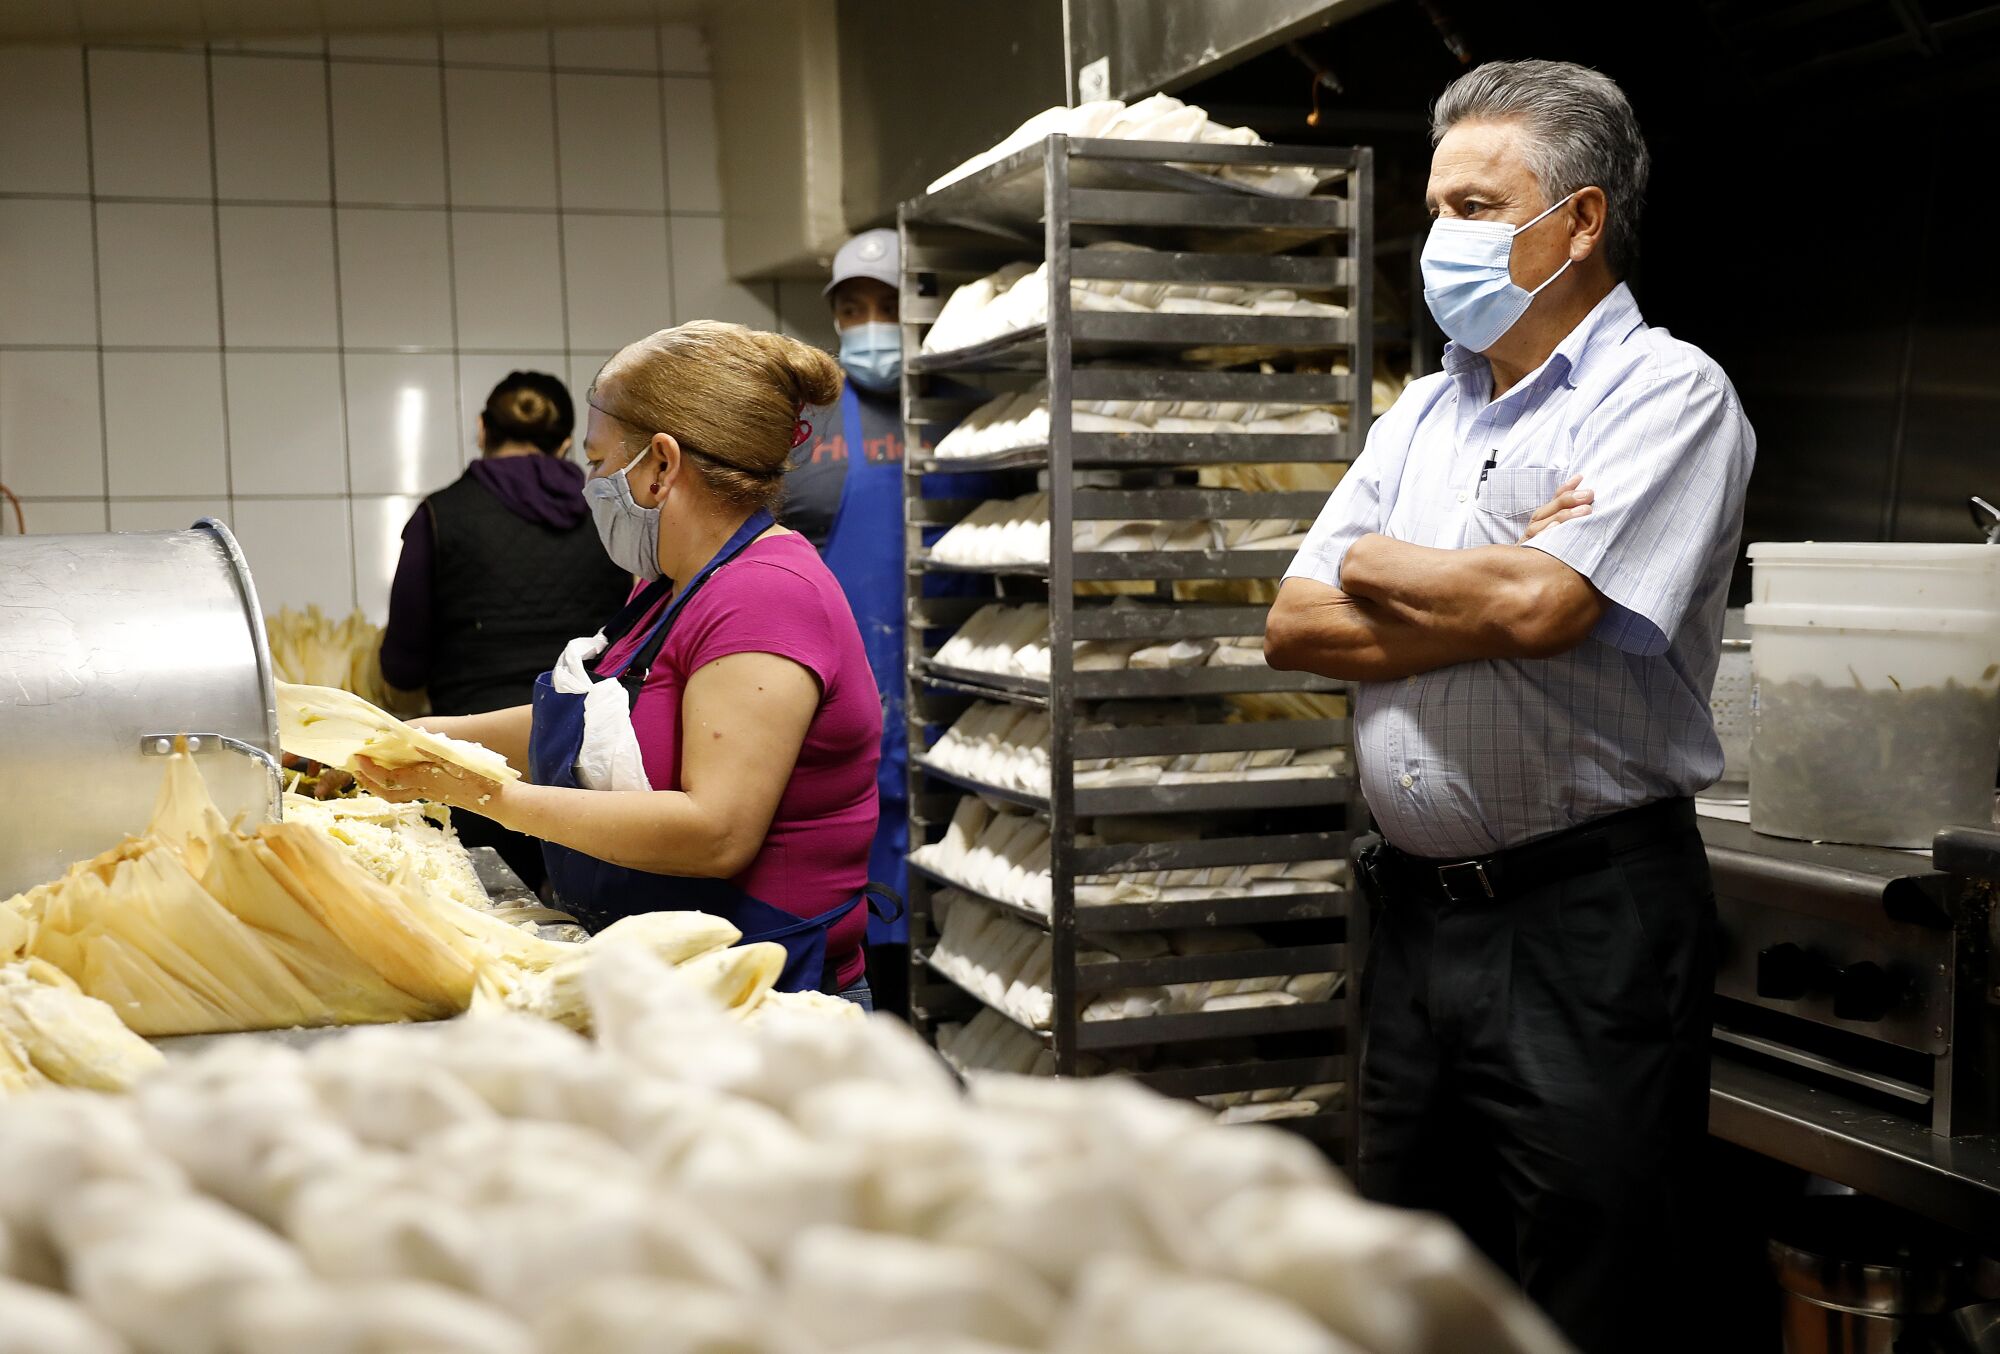 Juan Manuel Santoyo looks on as workers including Maria Franco make tamales at Tamales Liliana's